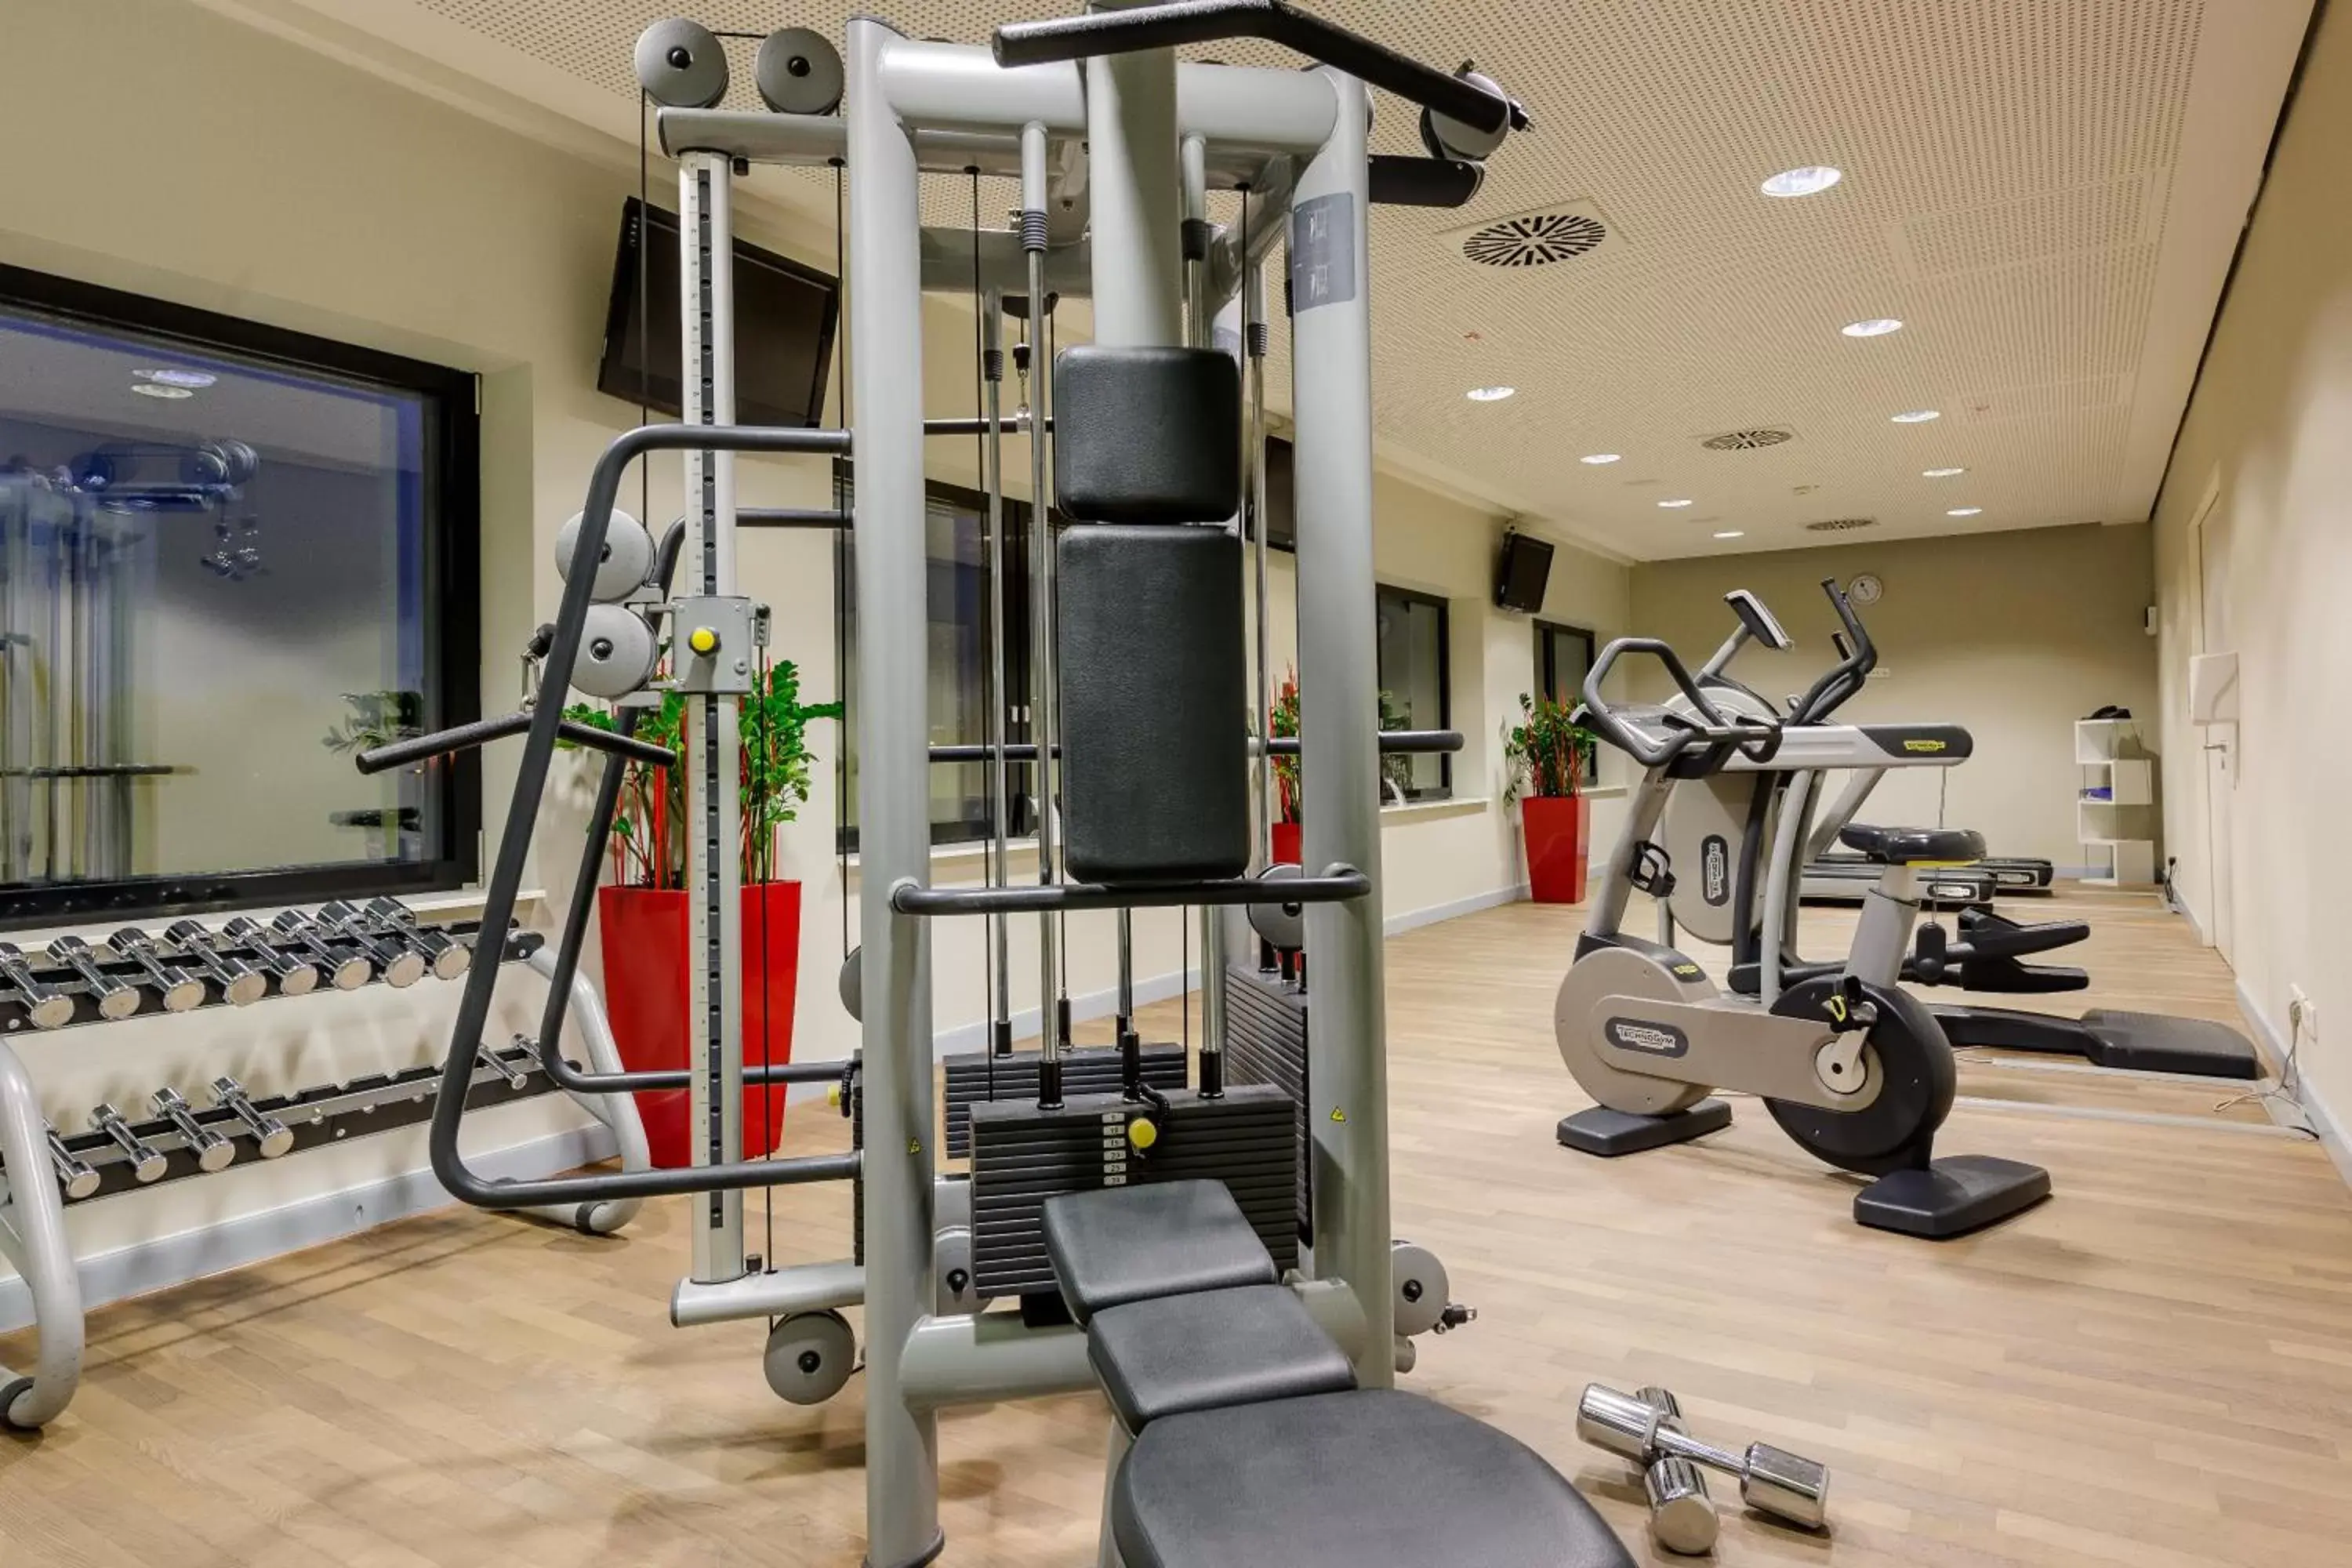 Fitness centre/facilities, Fitness Center/Facilities in Novotel München Airport